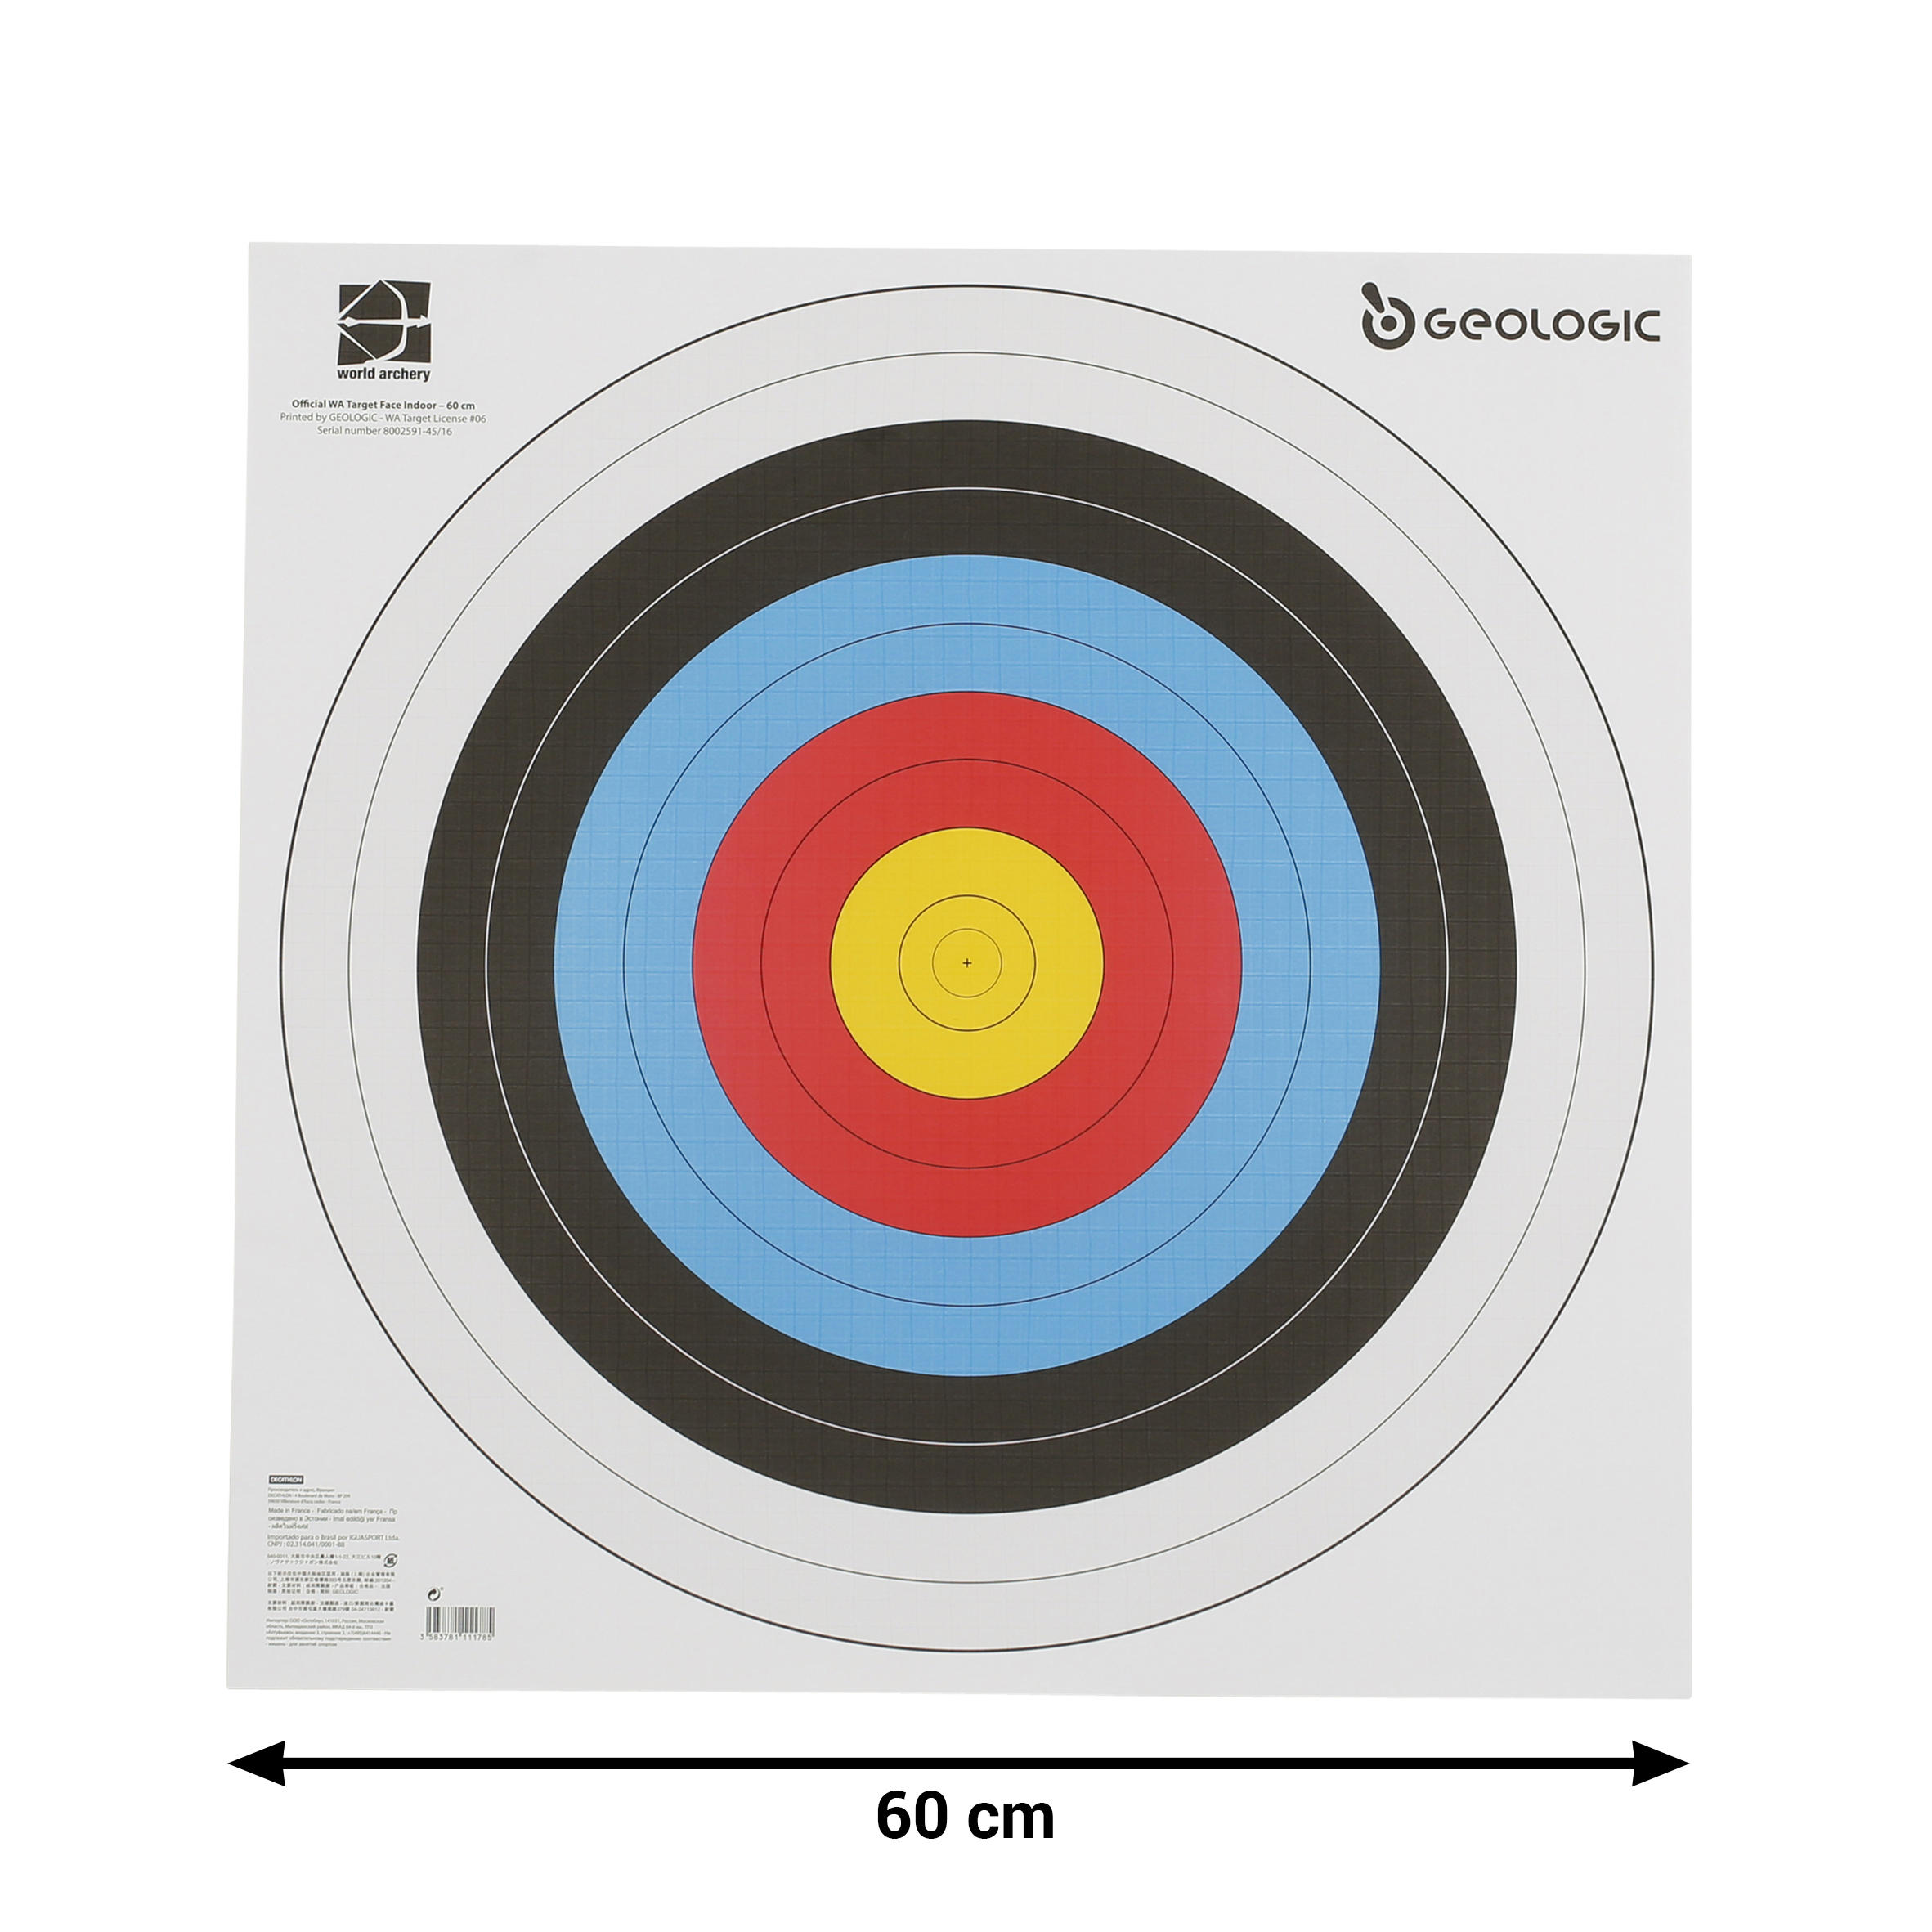 5 Archery Target Faces - 60 x 60 cm - GEOLOGIC